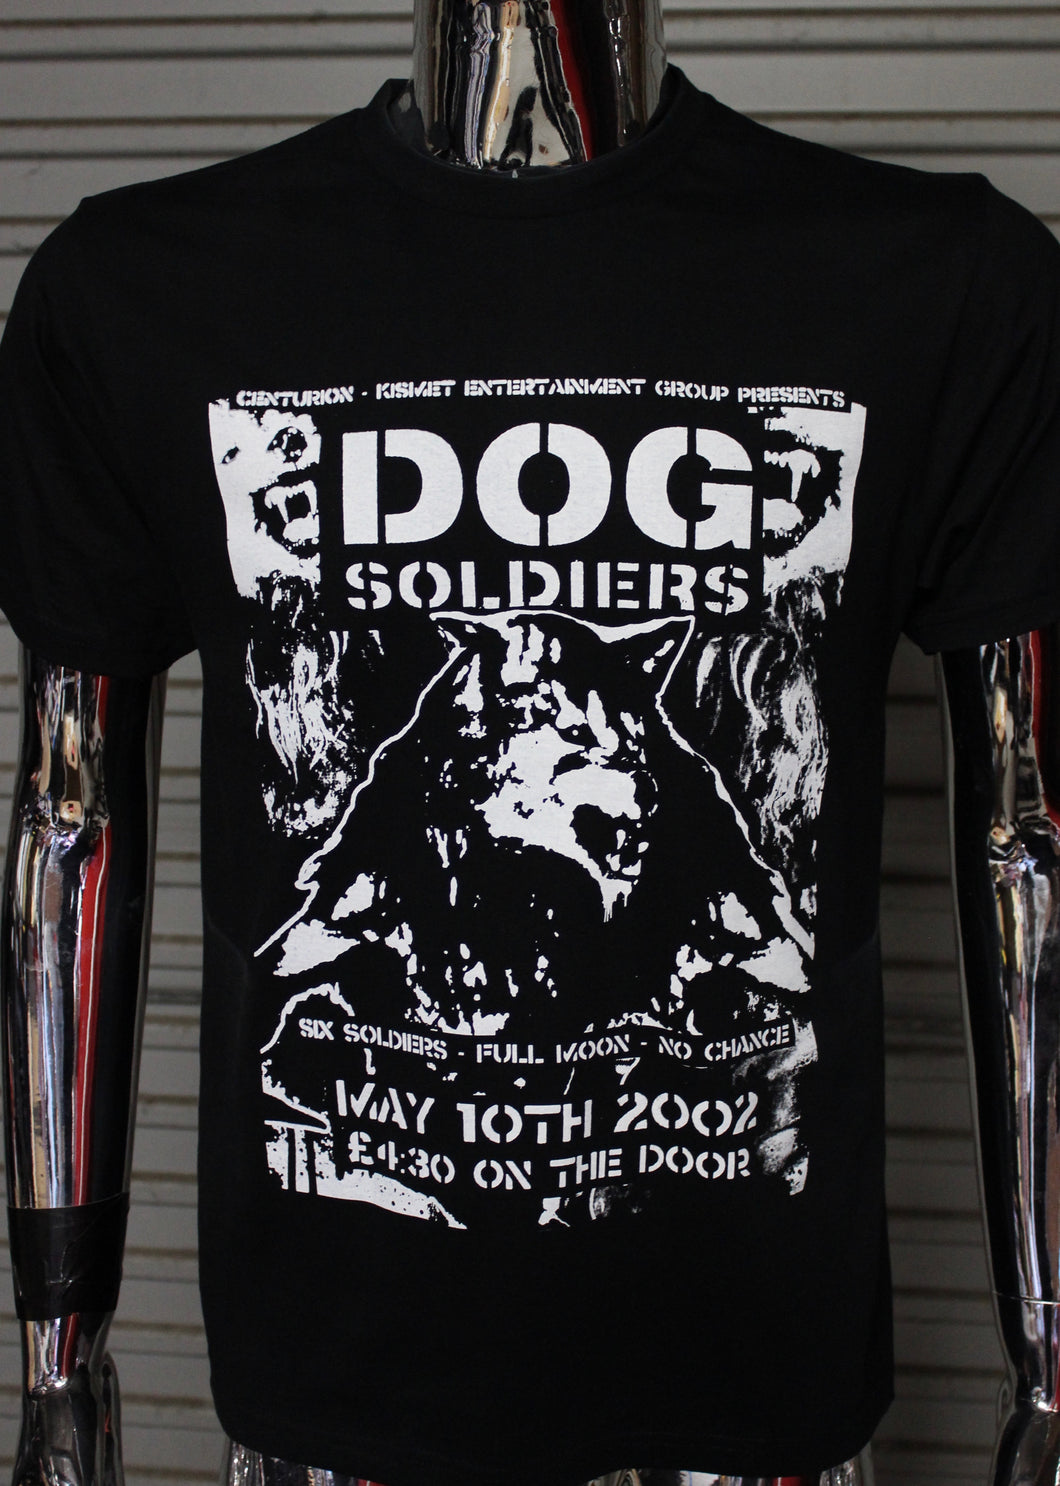 Dog Soldiers DIY punk flyer T-shirt